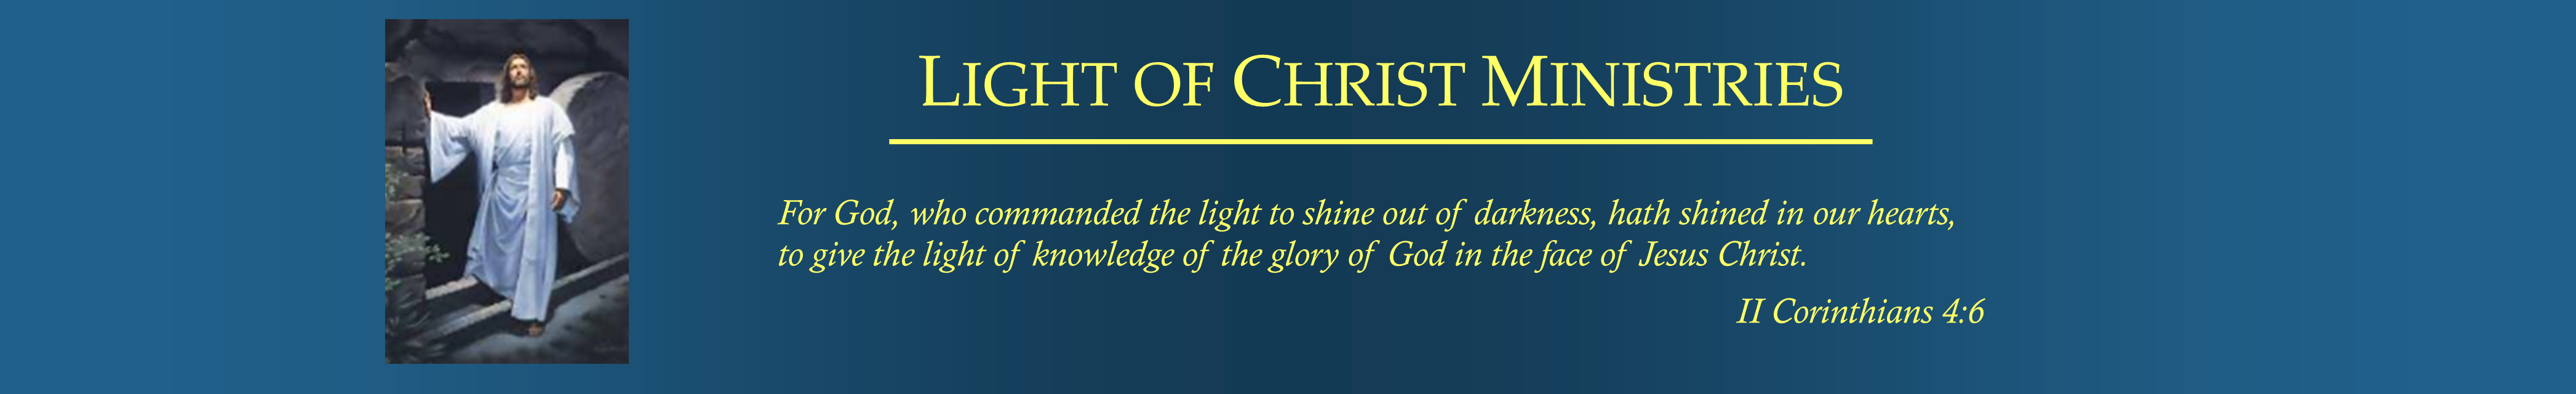 Light of Christ Ministries